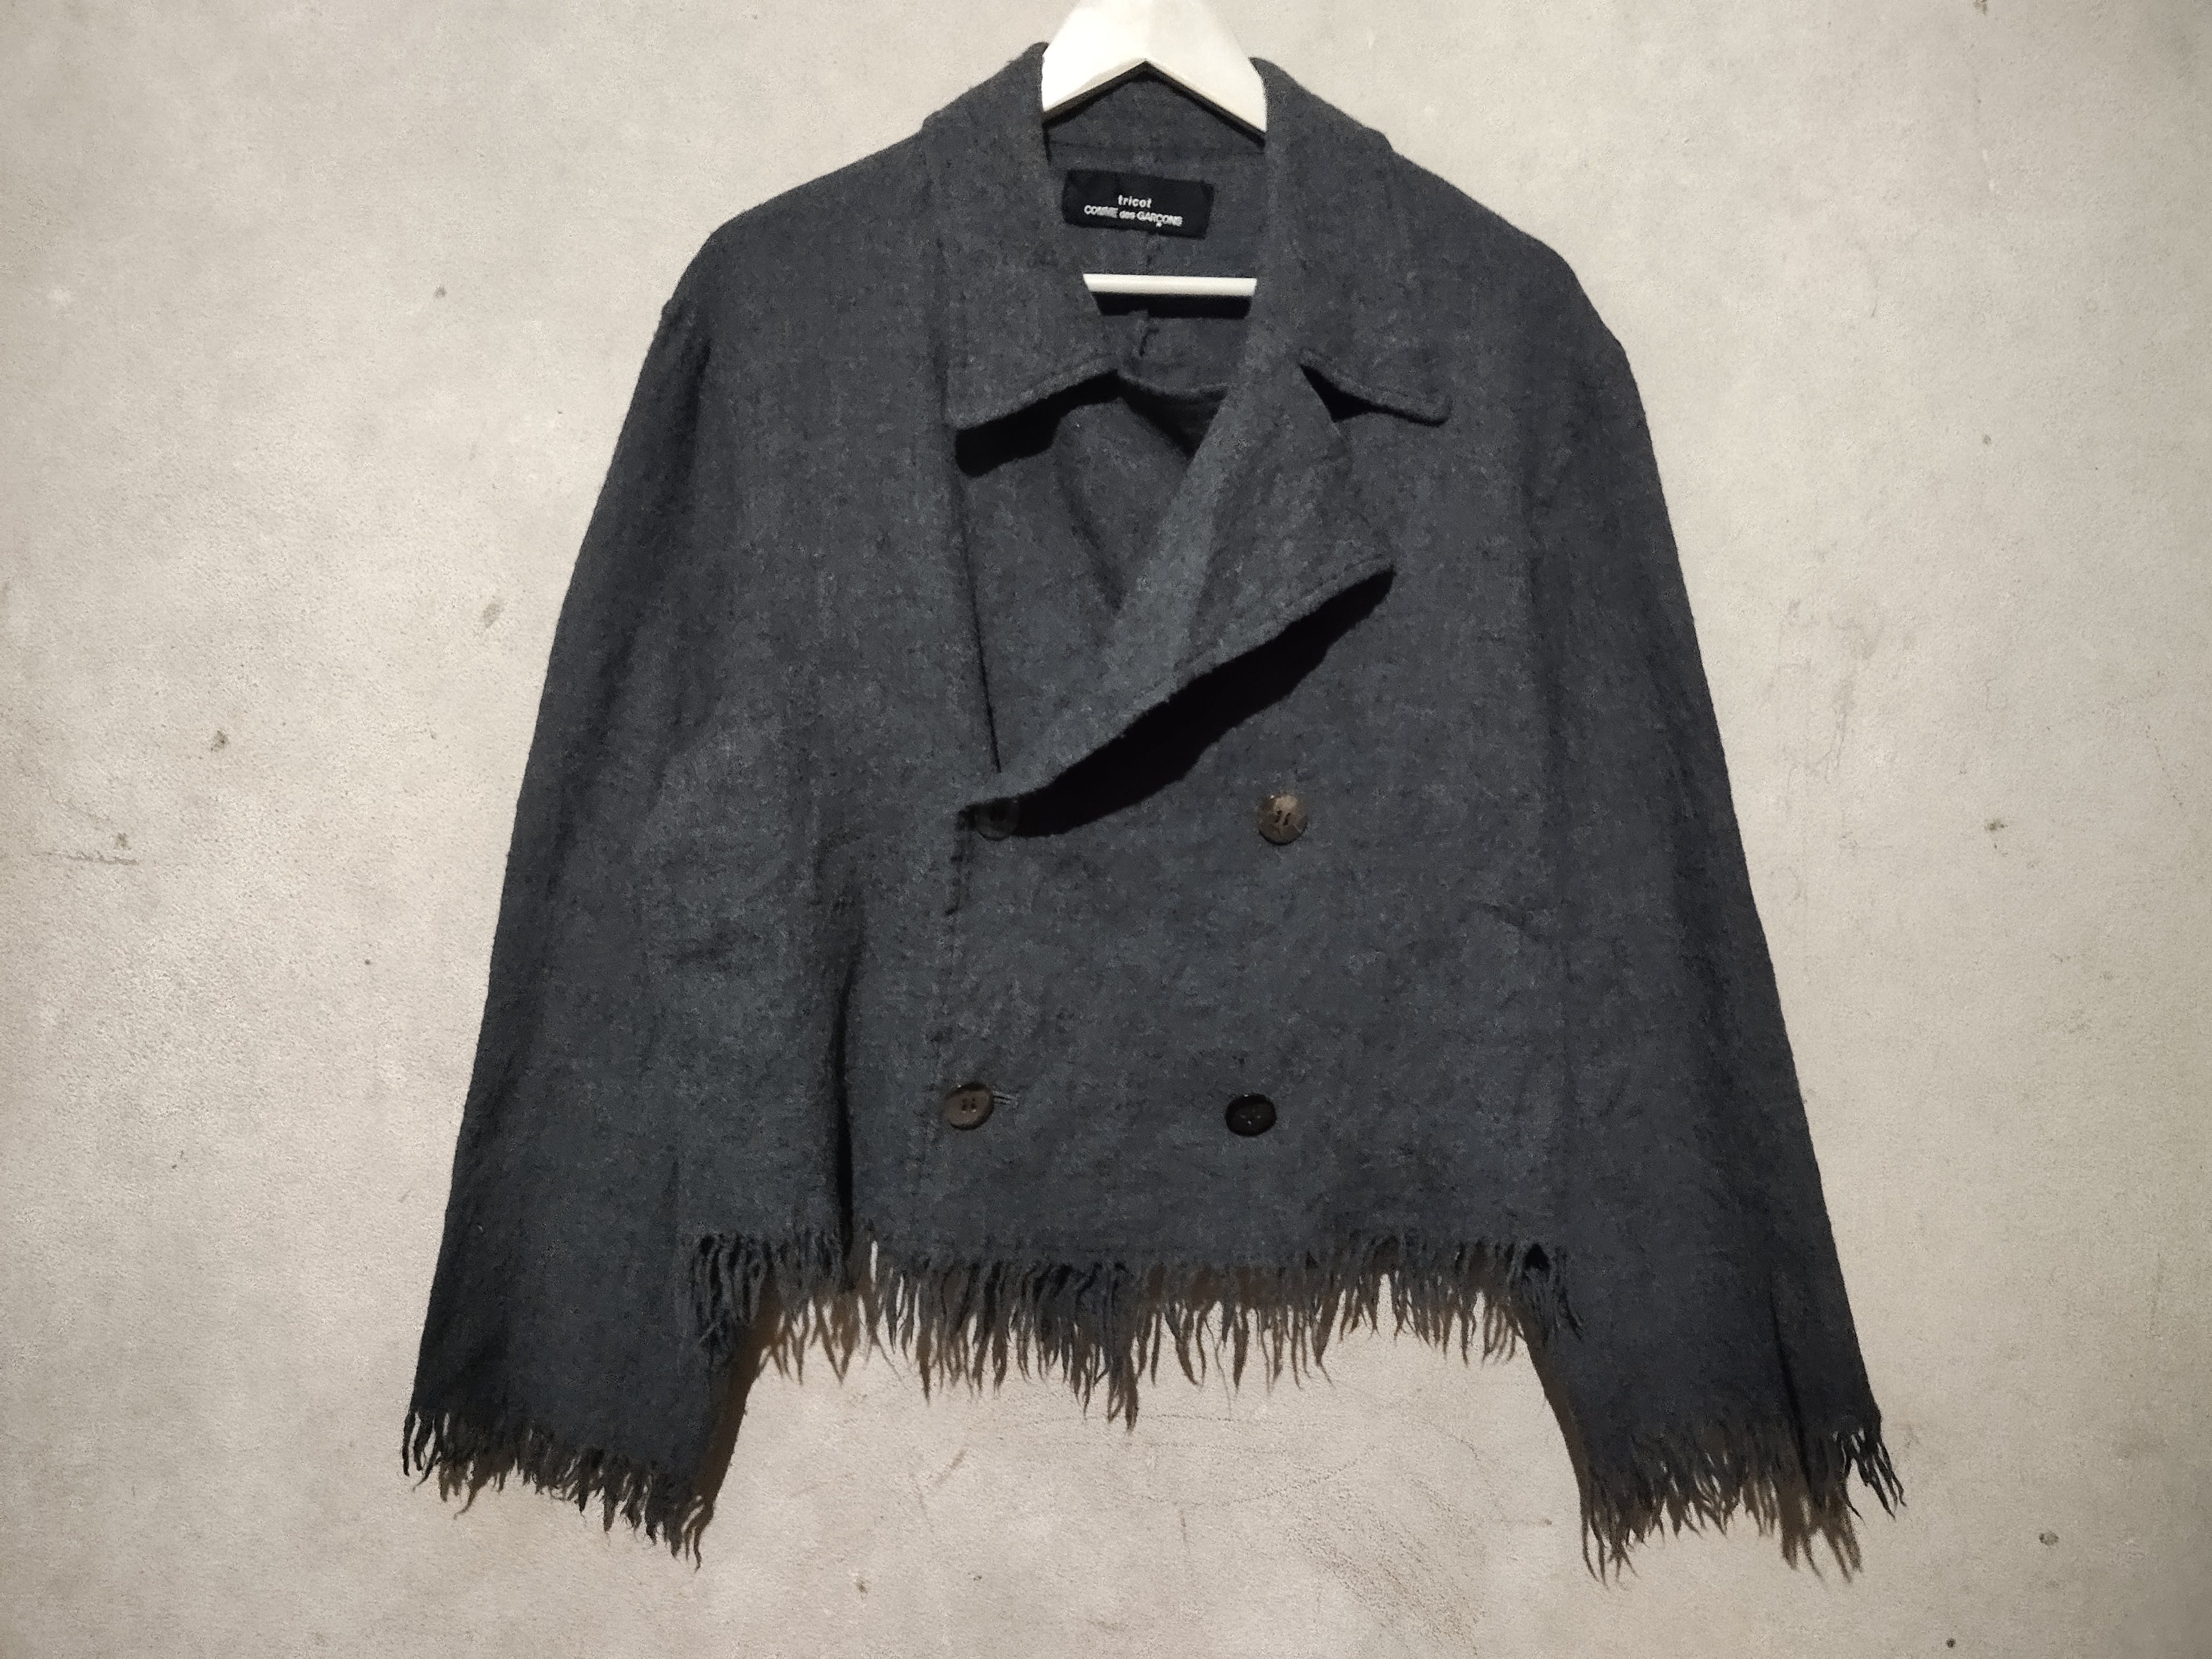 Vintage AD1992 tricot comme des gargons wool crop top jacket - 1